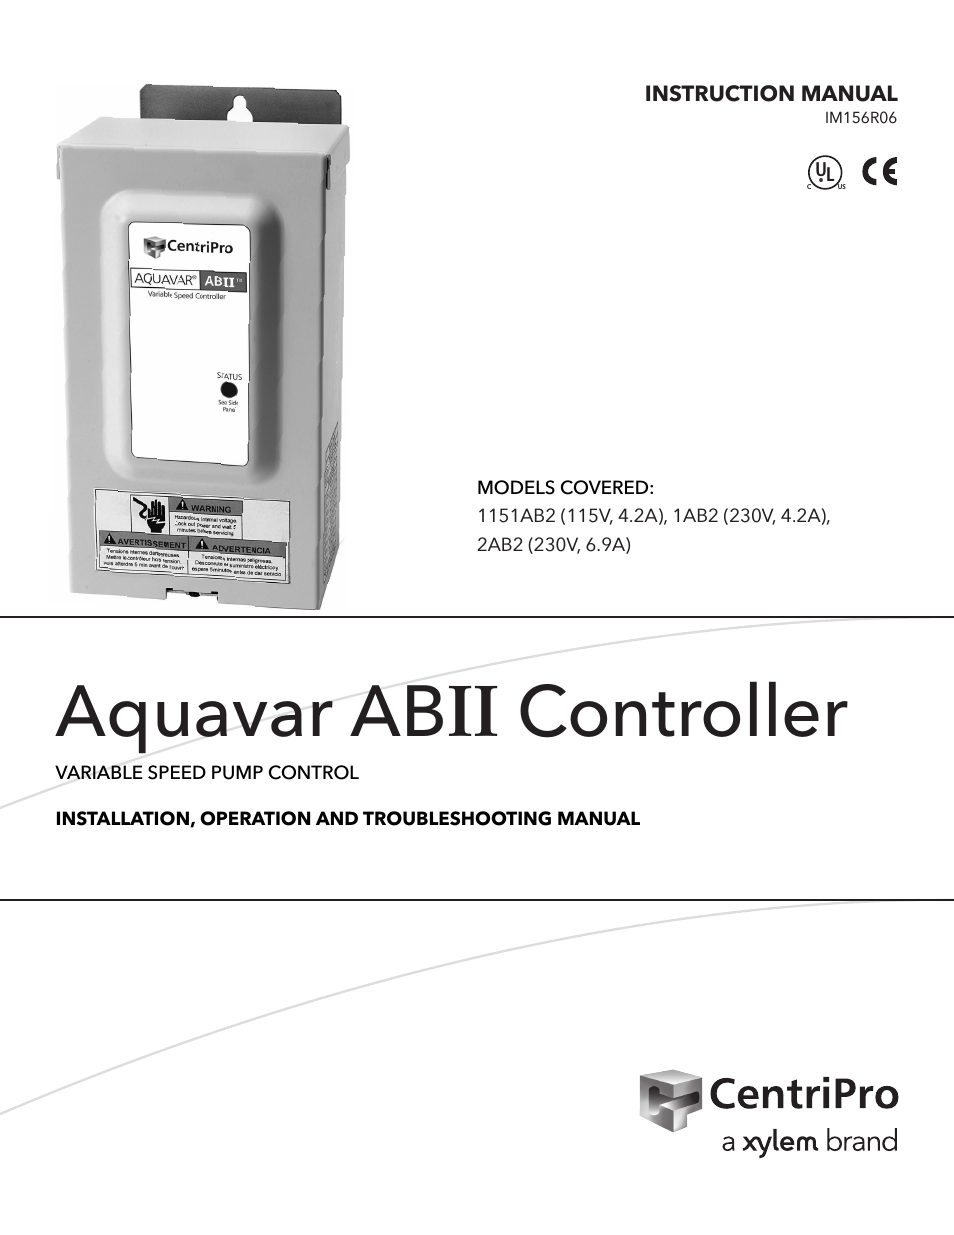 IM156 R06 1AB2 & 2AB2, Aquavar ABII Variable Speed Pump Controller